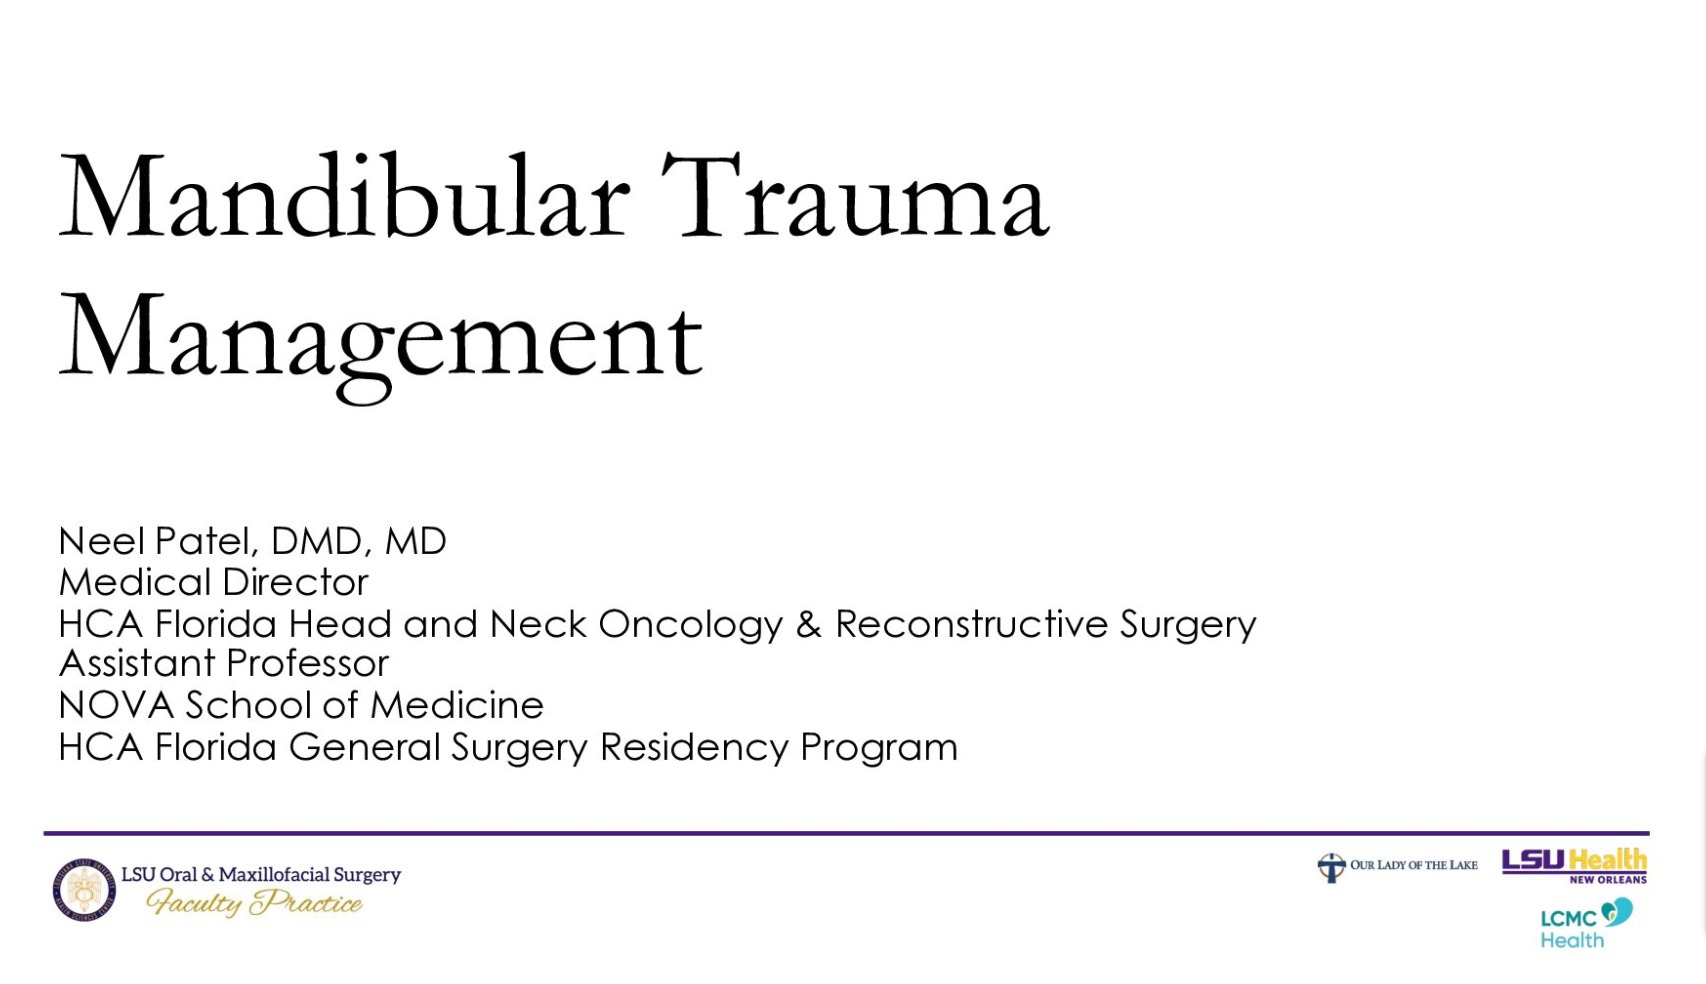 Trauma: Emergency Management, Mandibular, Midface, Leforte Fractures, Management of Soft Tissue Injuries (Part 2)